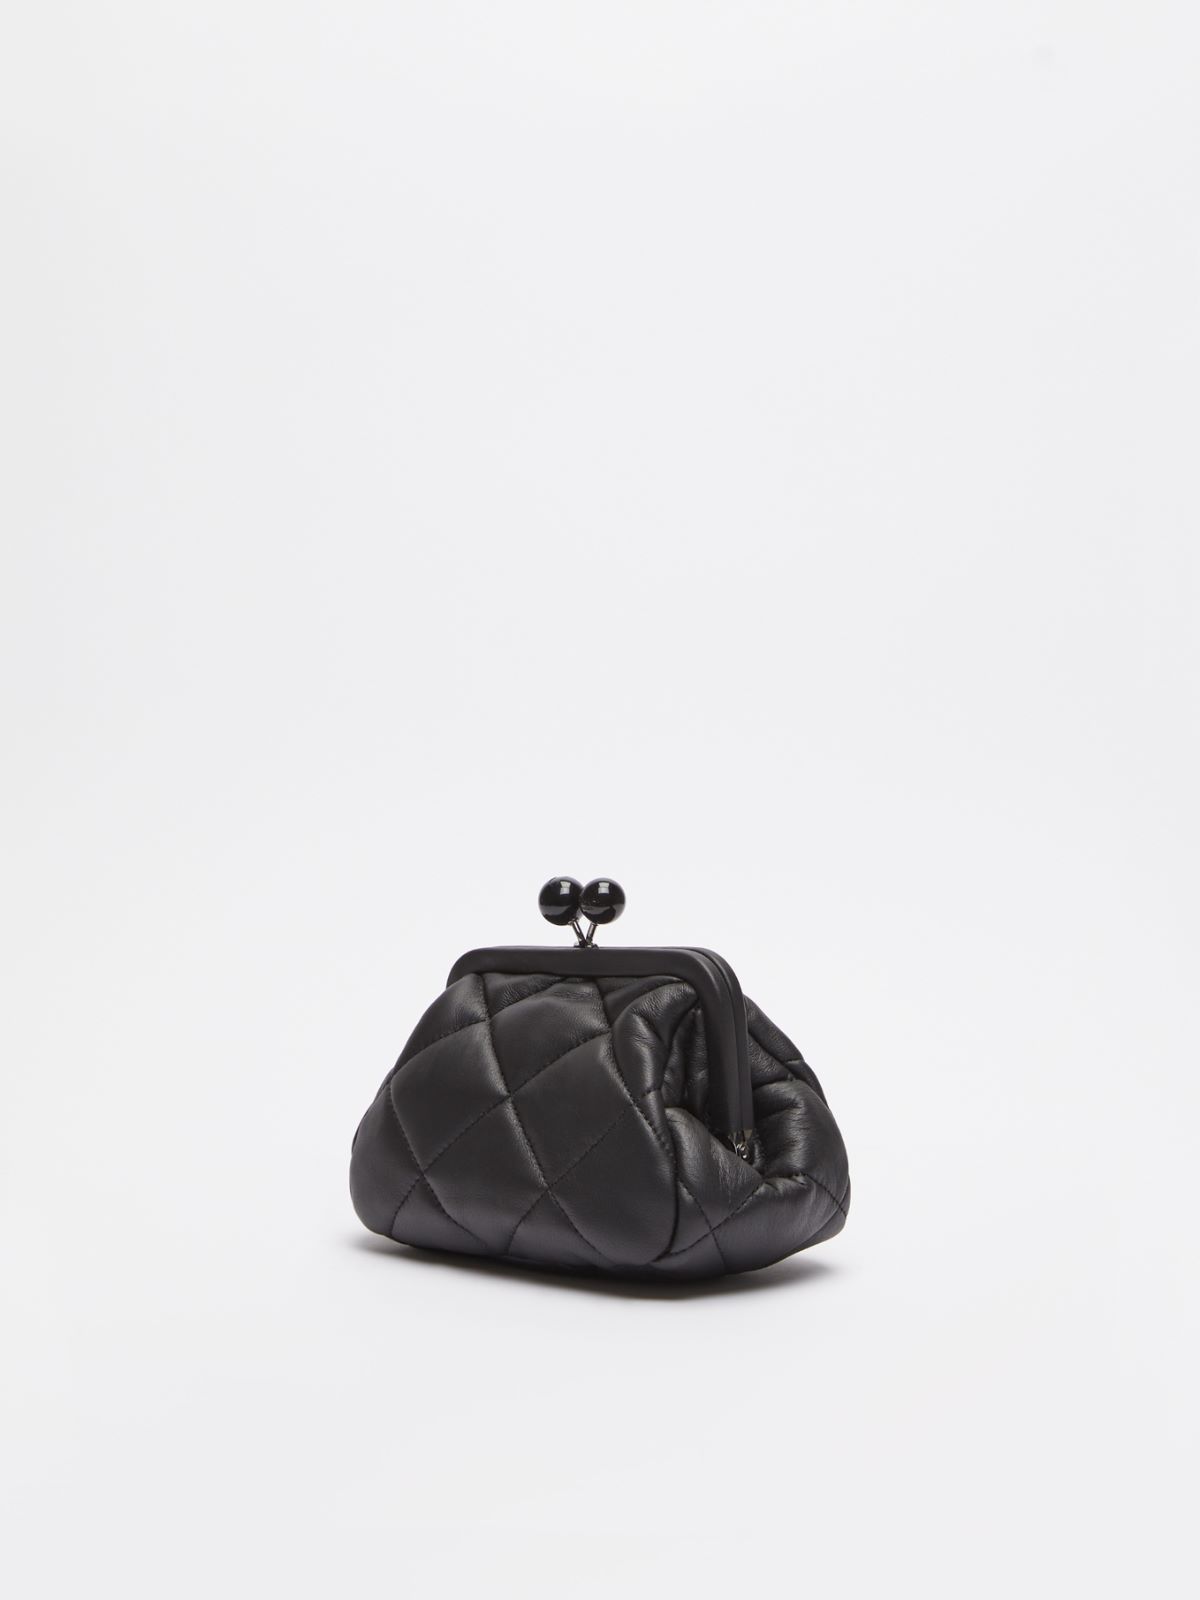 Nappa leather Pasticcino Bag - BLACK - Weekend Max Mara - 2